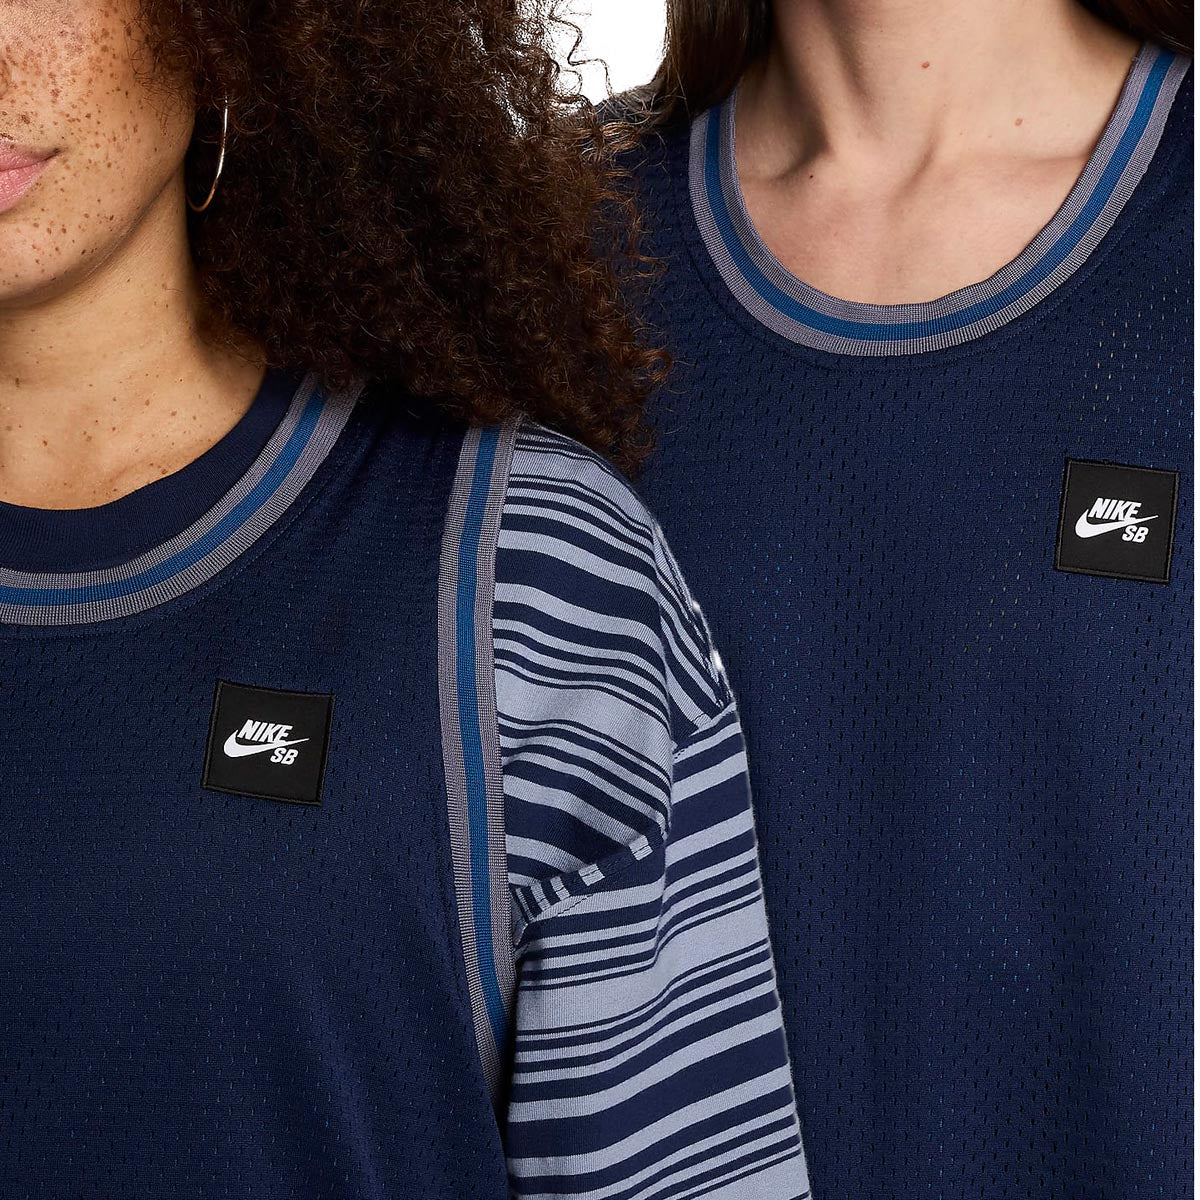 Nike SB Basketball Skate Jersey - Midnight Navy/Court Blue image 5